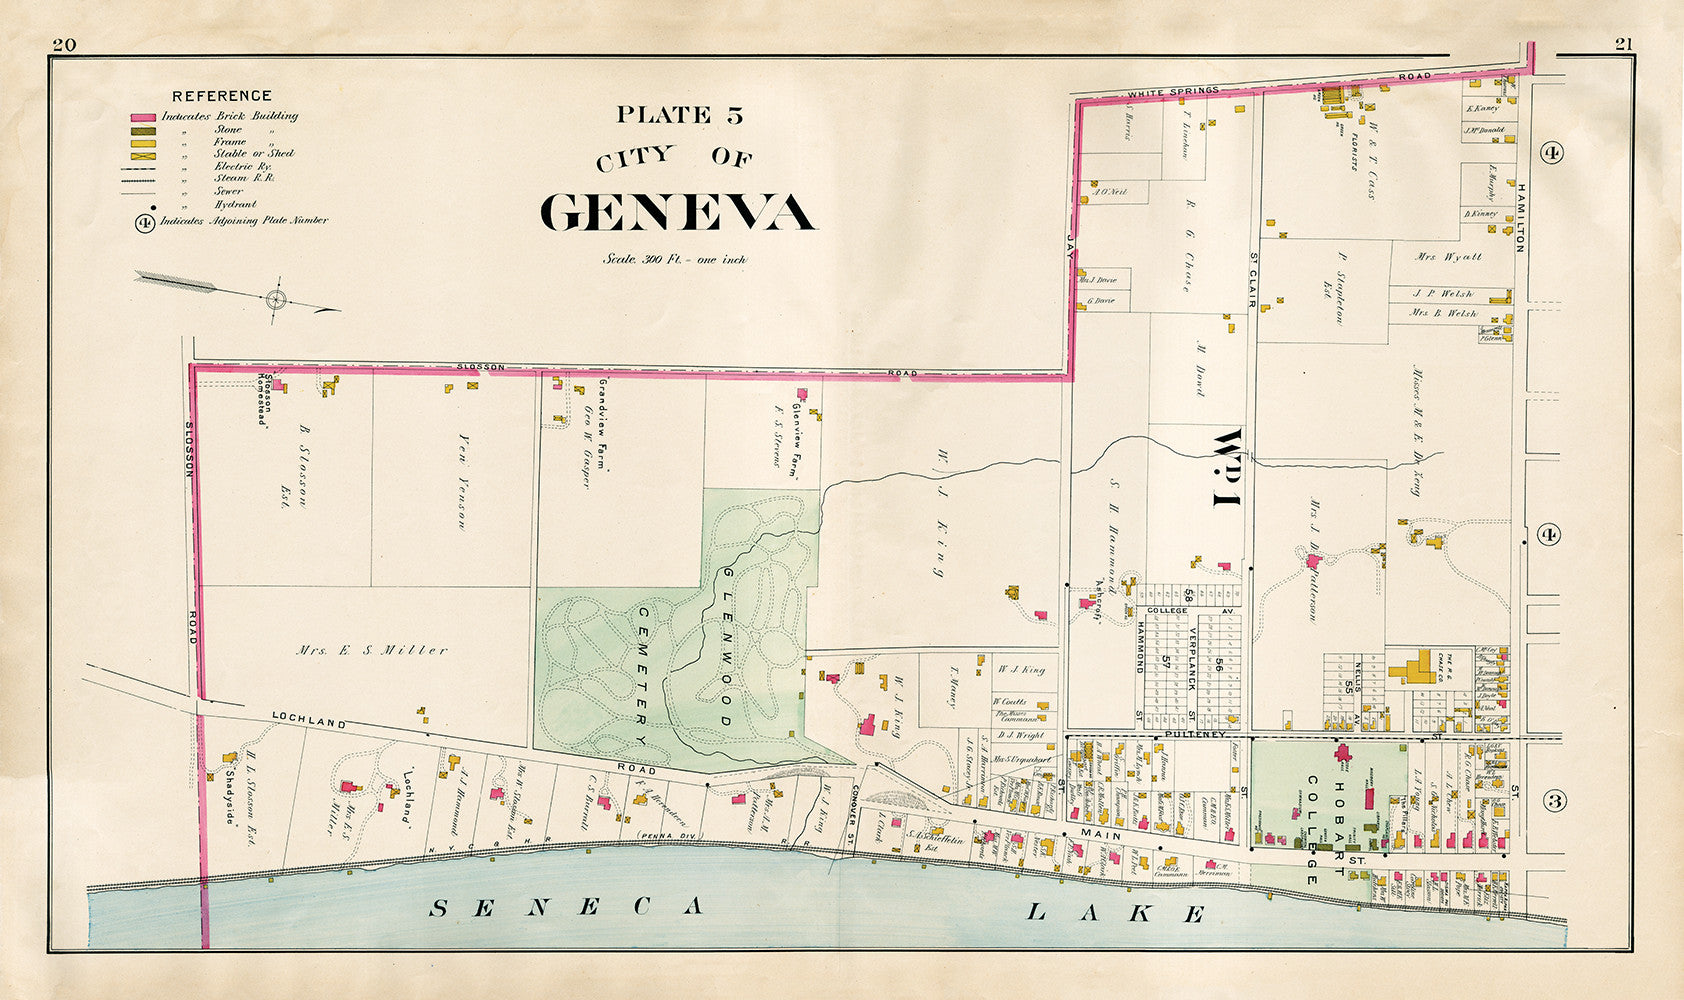 City of Geneva - Plate 5 - Print - Stomping Grounds